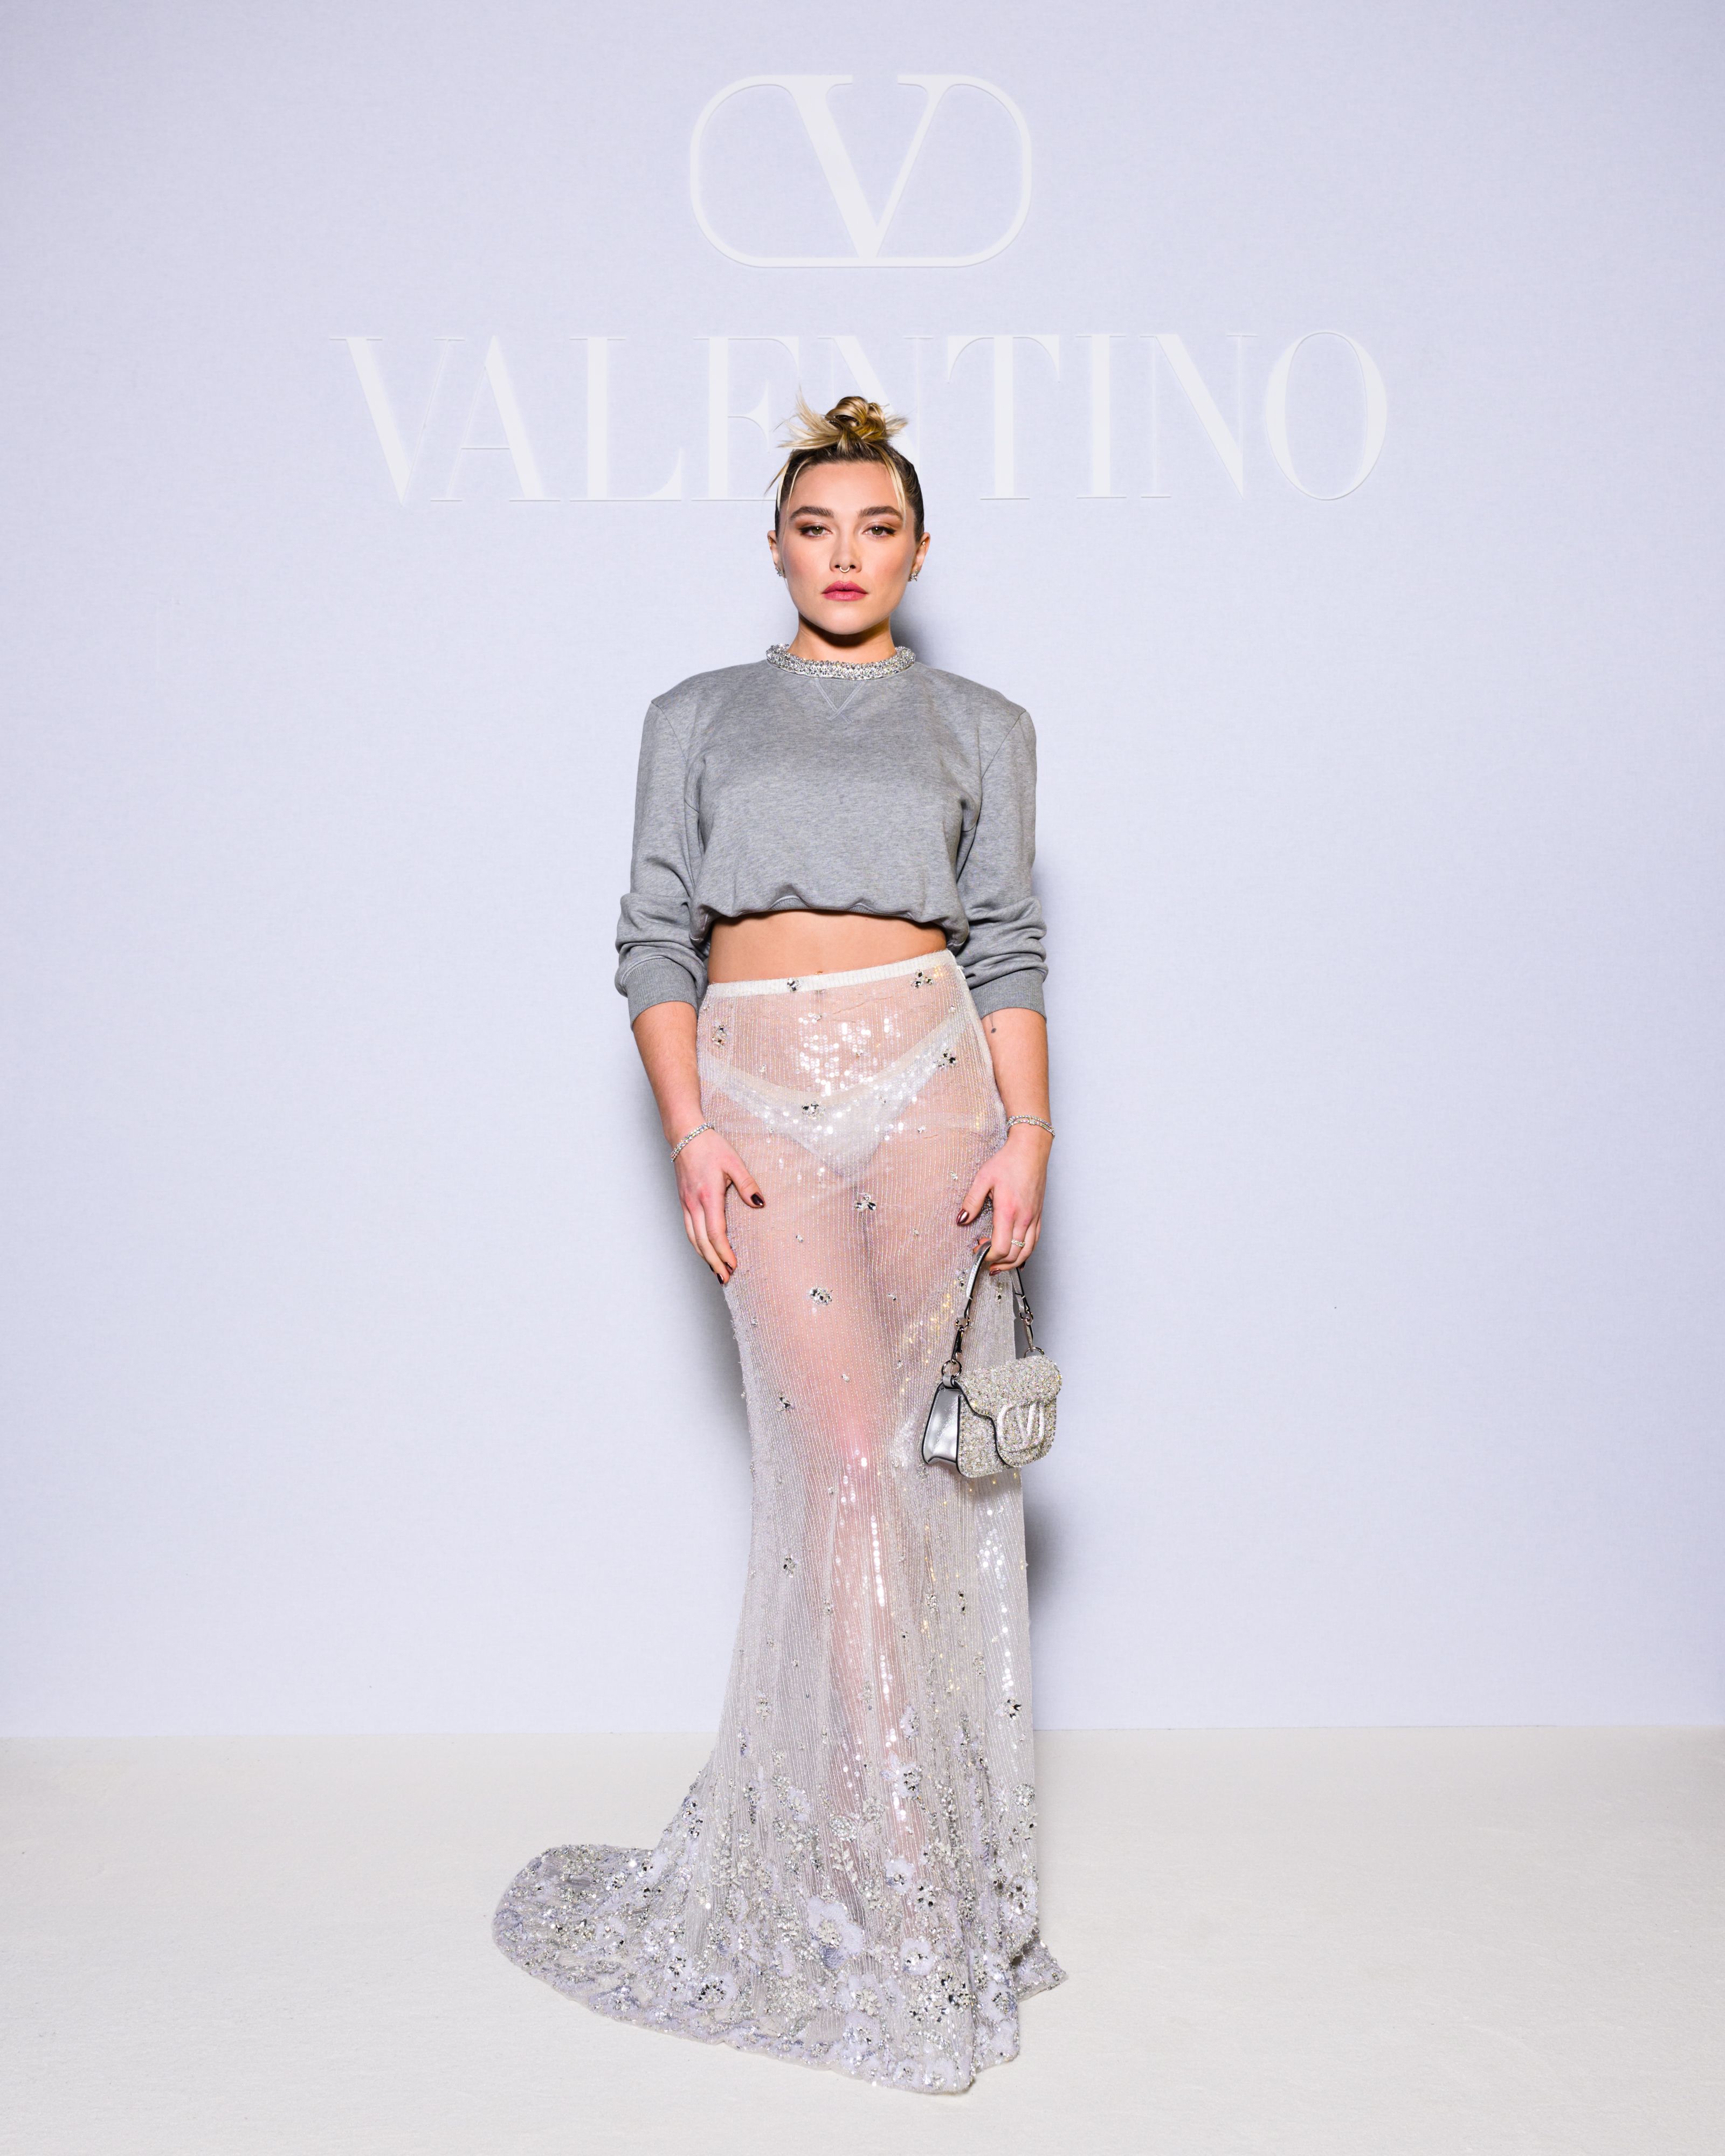 Paris Fashion Week 2023: Best and Worst Dressed Stars, Photos